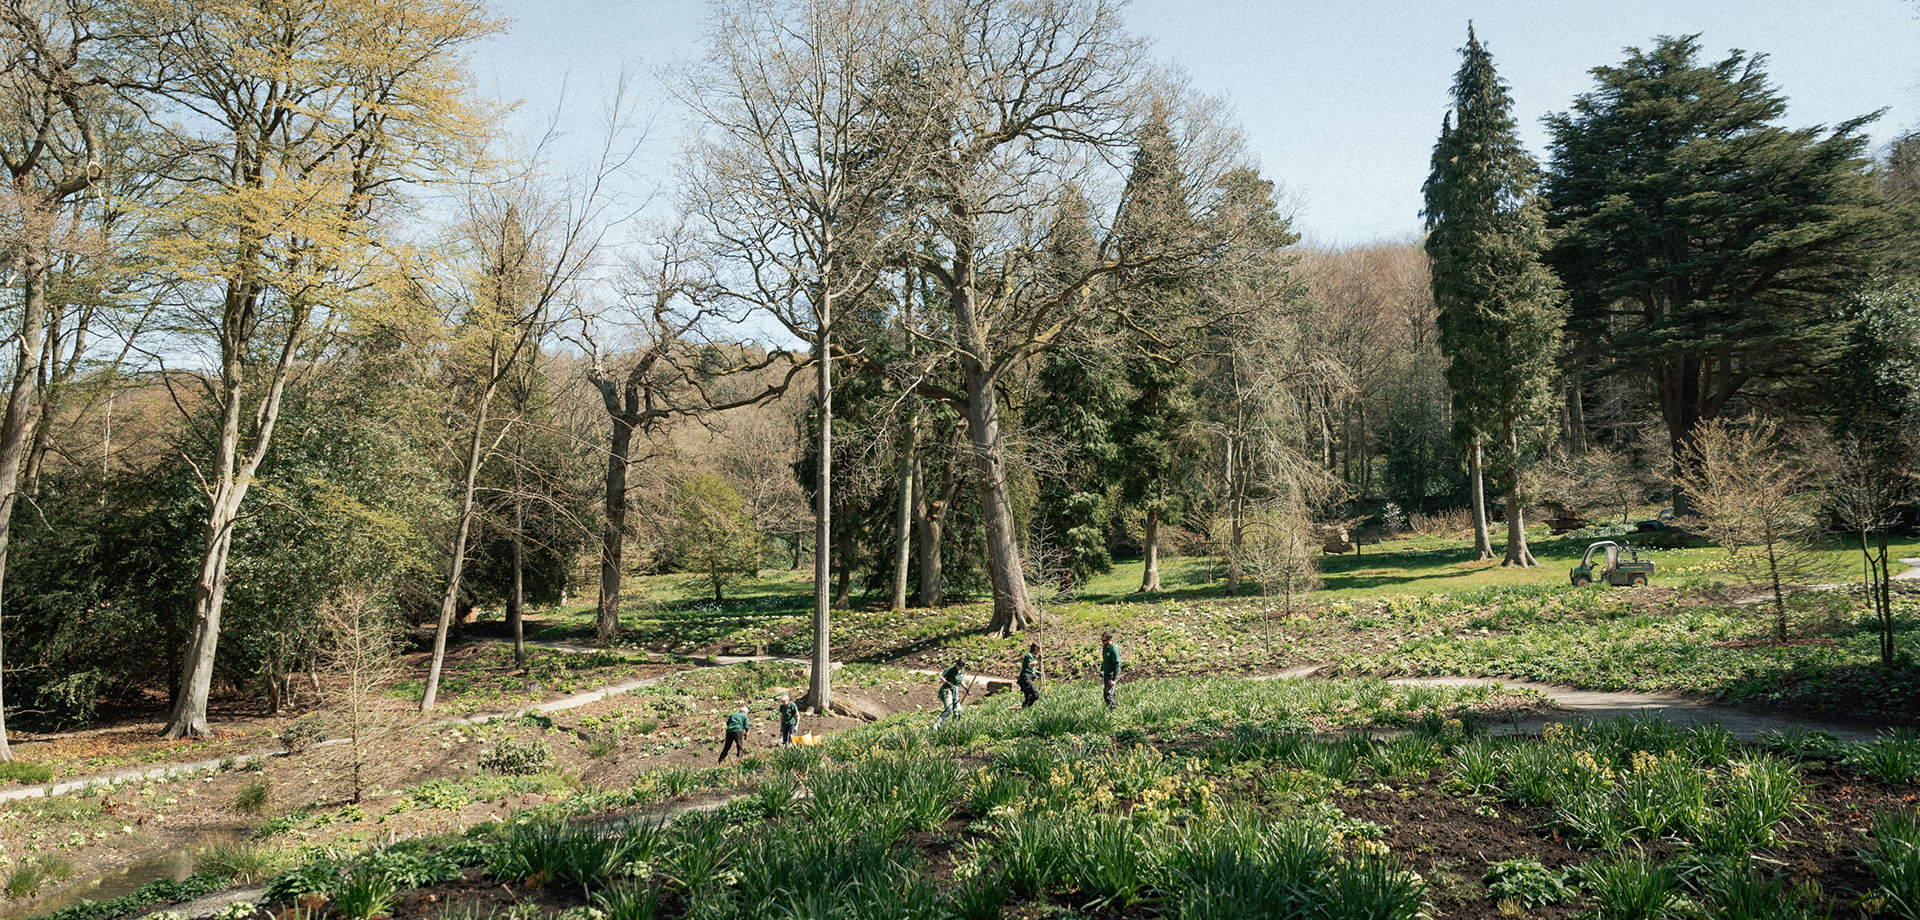 Developments in the Chatsworth Garden